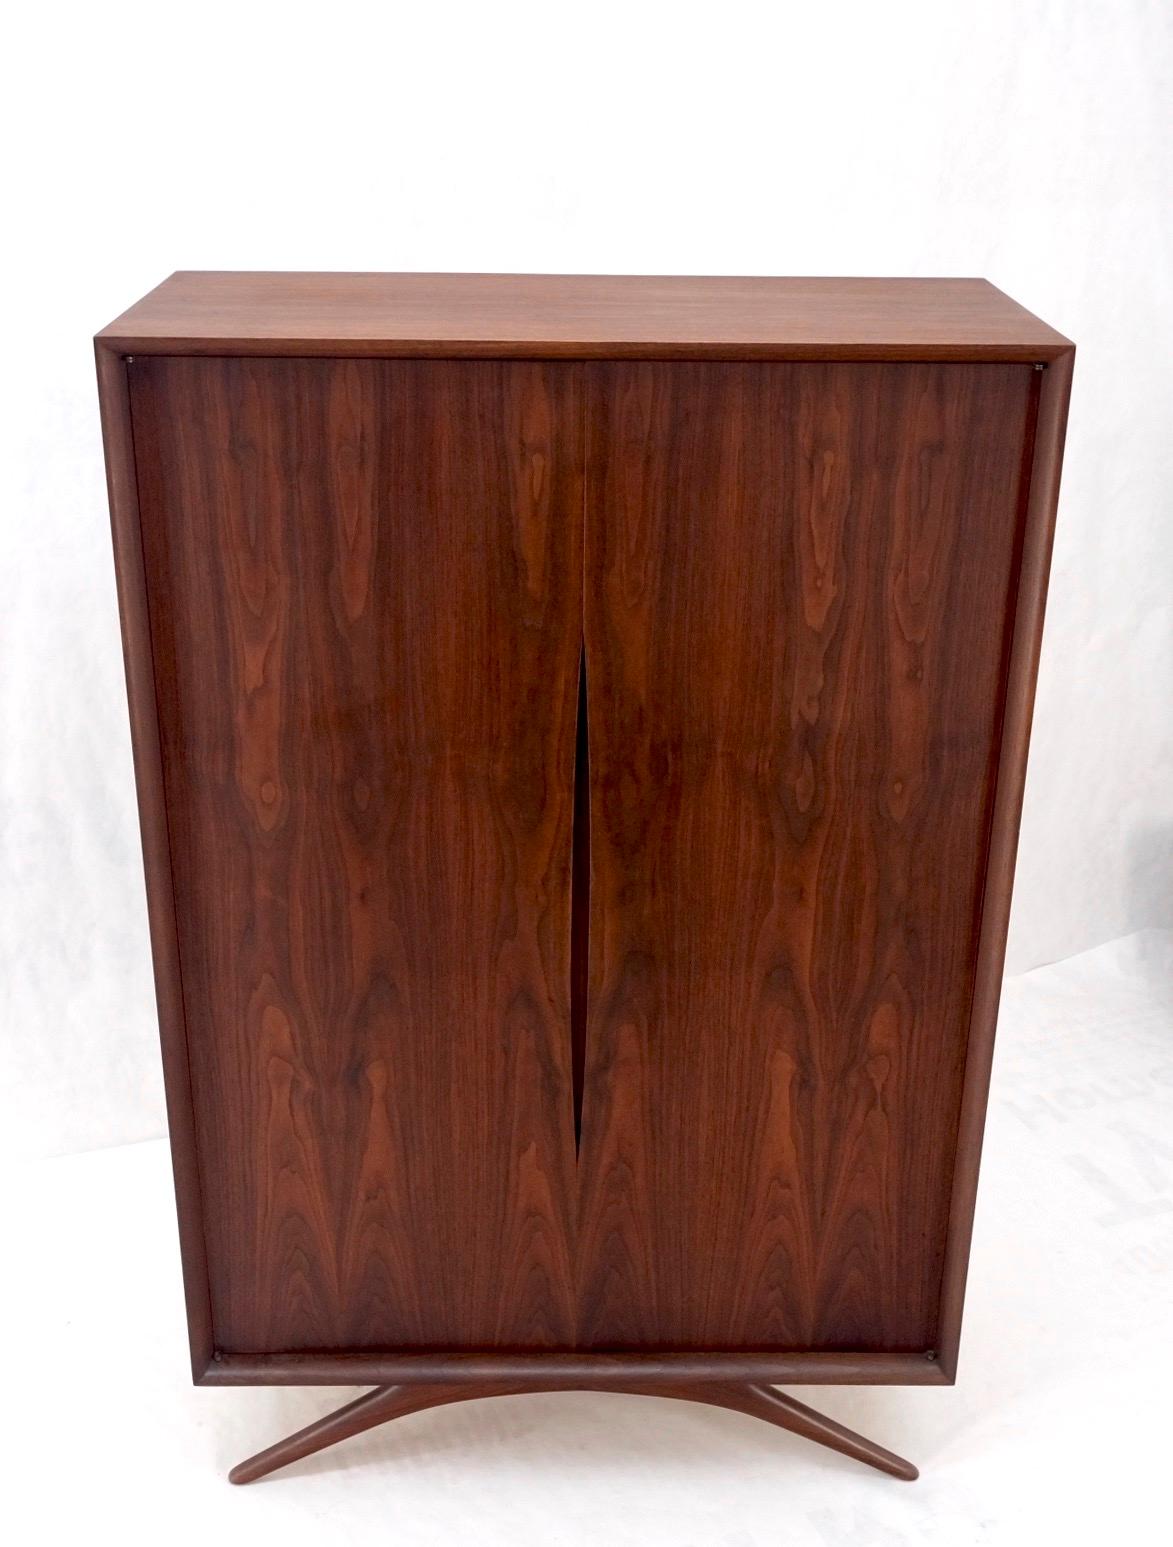  Vladimir Kagan Walnut Dresser Two Door Cabinet Chifforobe on Slayed Legs Mint! For Sale 9